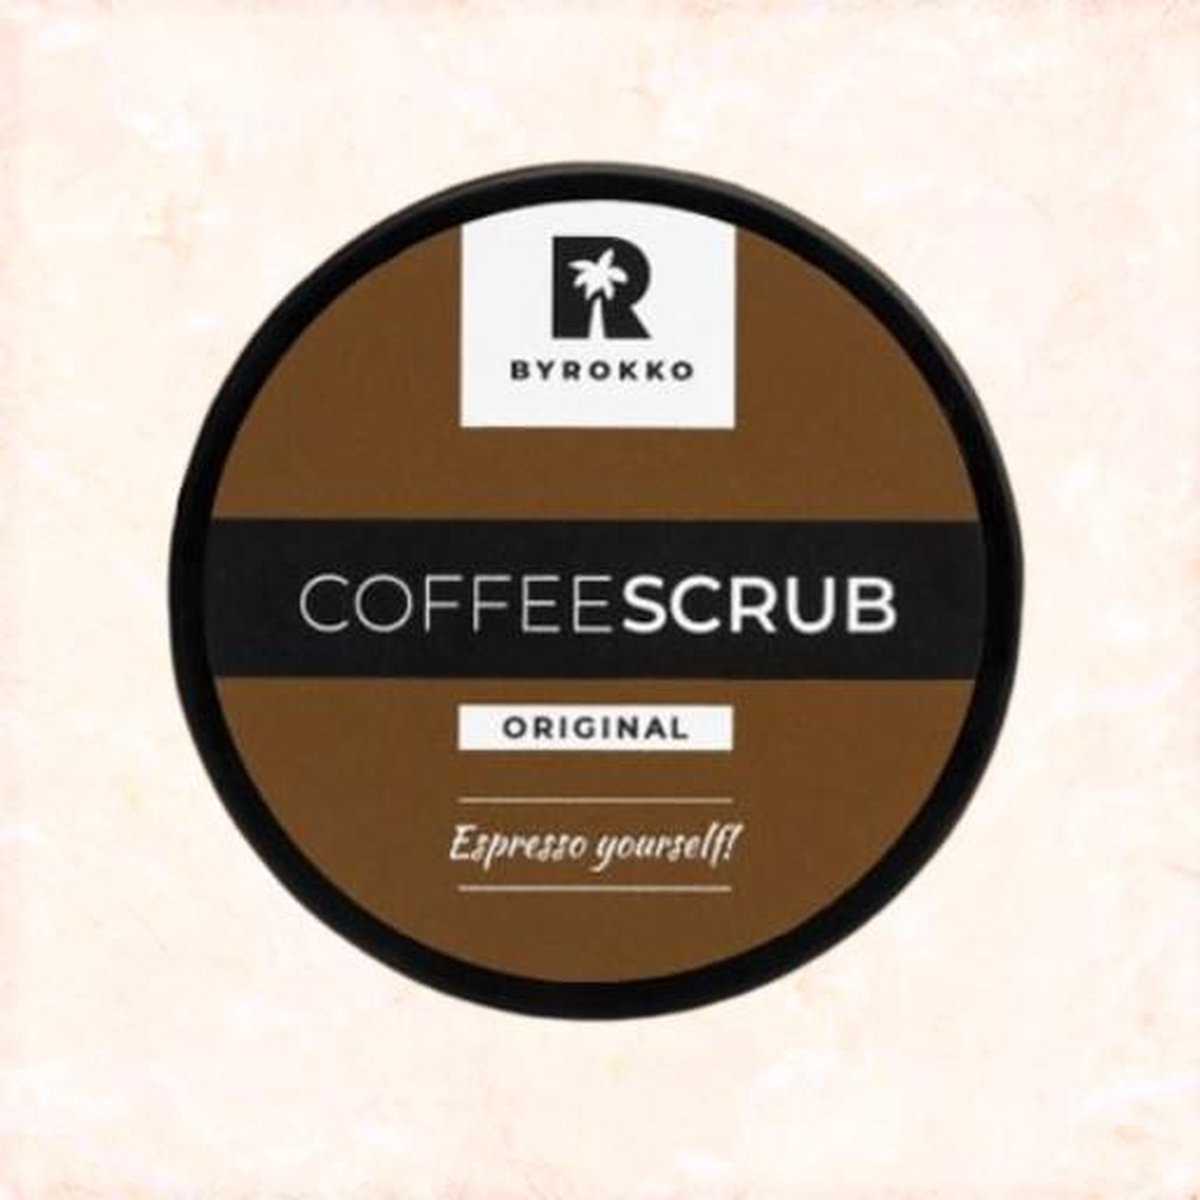 BYROKKO - Reinigingsscrub - Body scrub - Coffee scrub - Goed voor littekens, cellulitis, striae, puistjes - 210 ML -